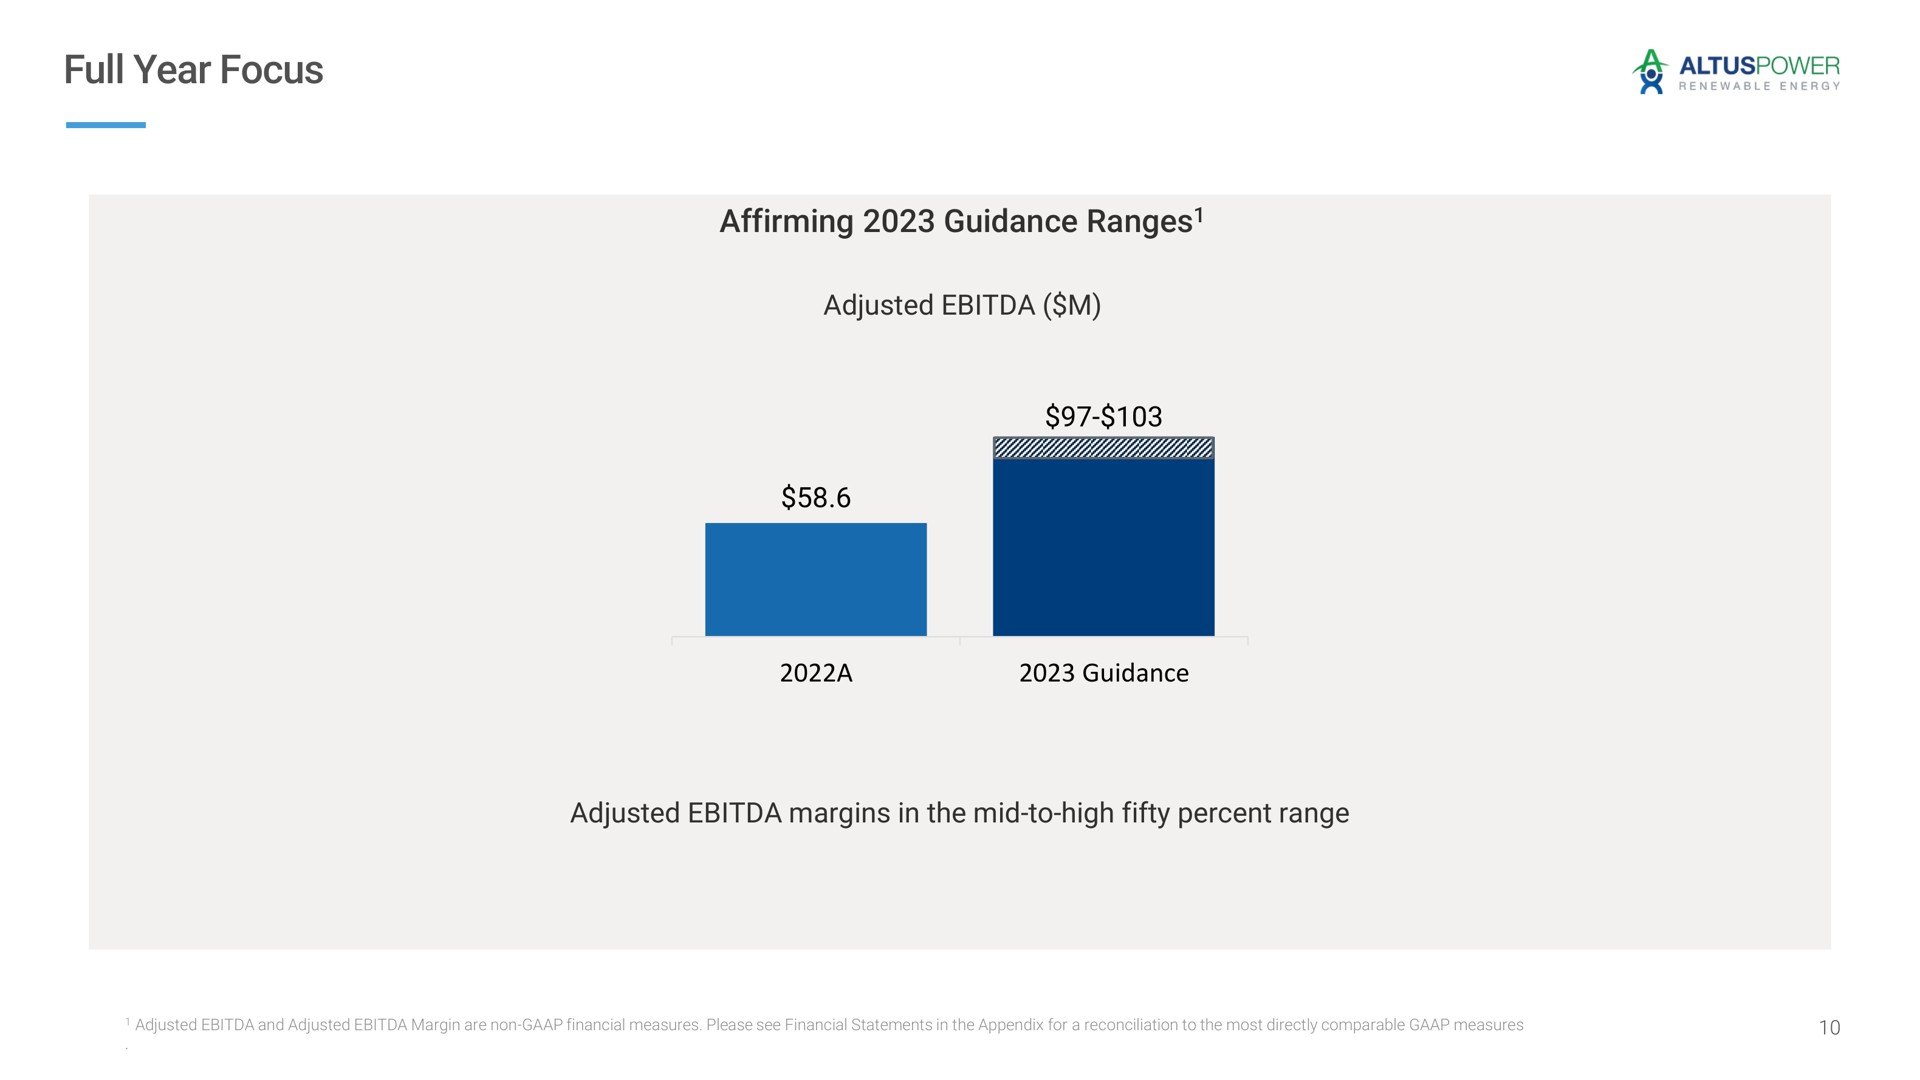 full year focus affirming guidance ranges ranges | Altus Power